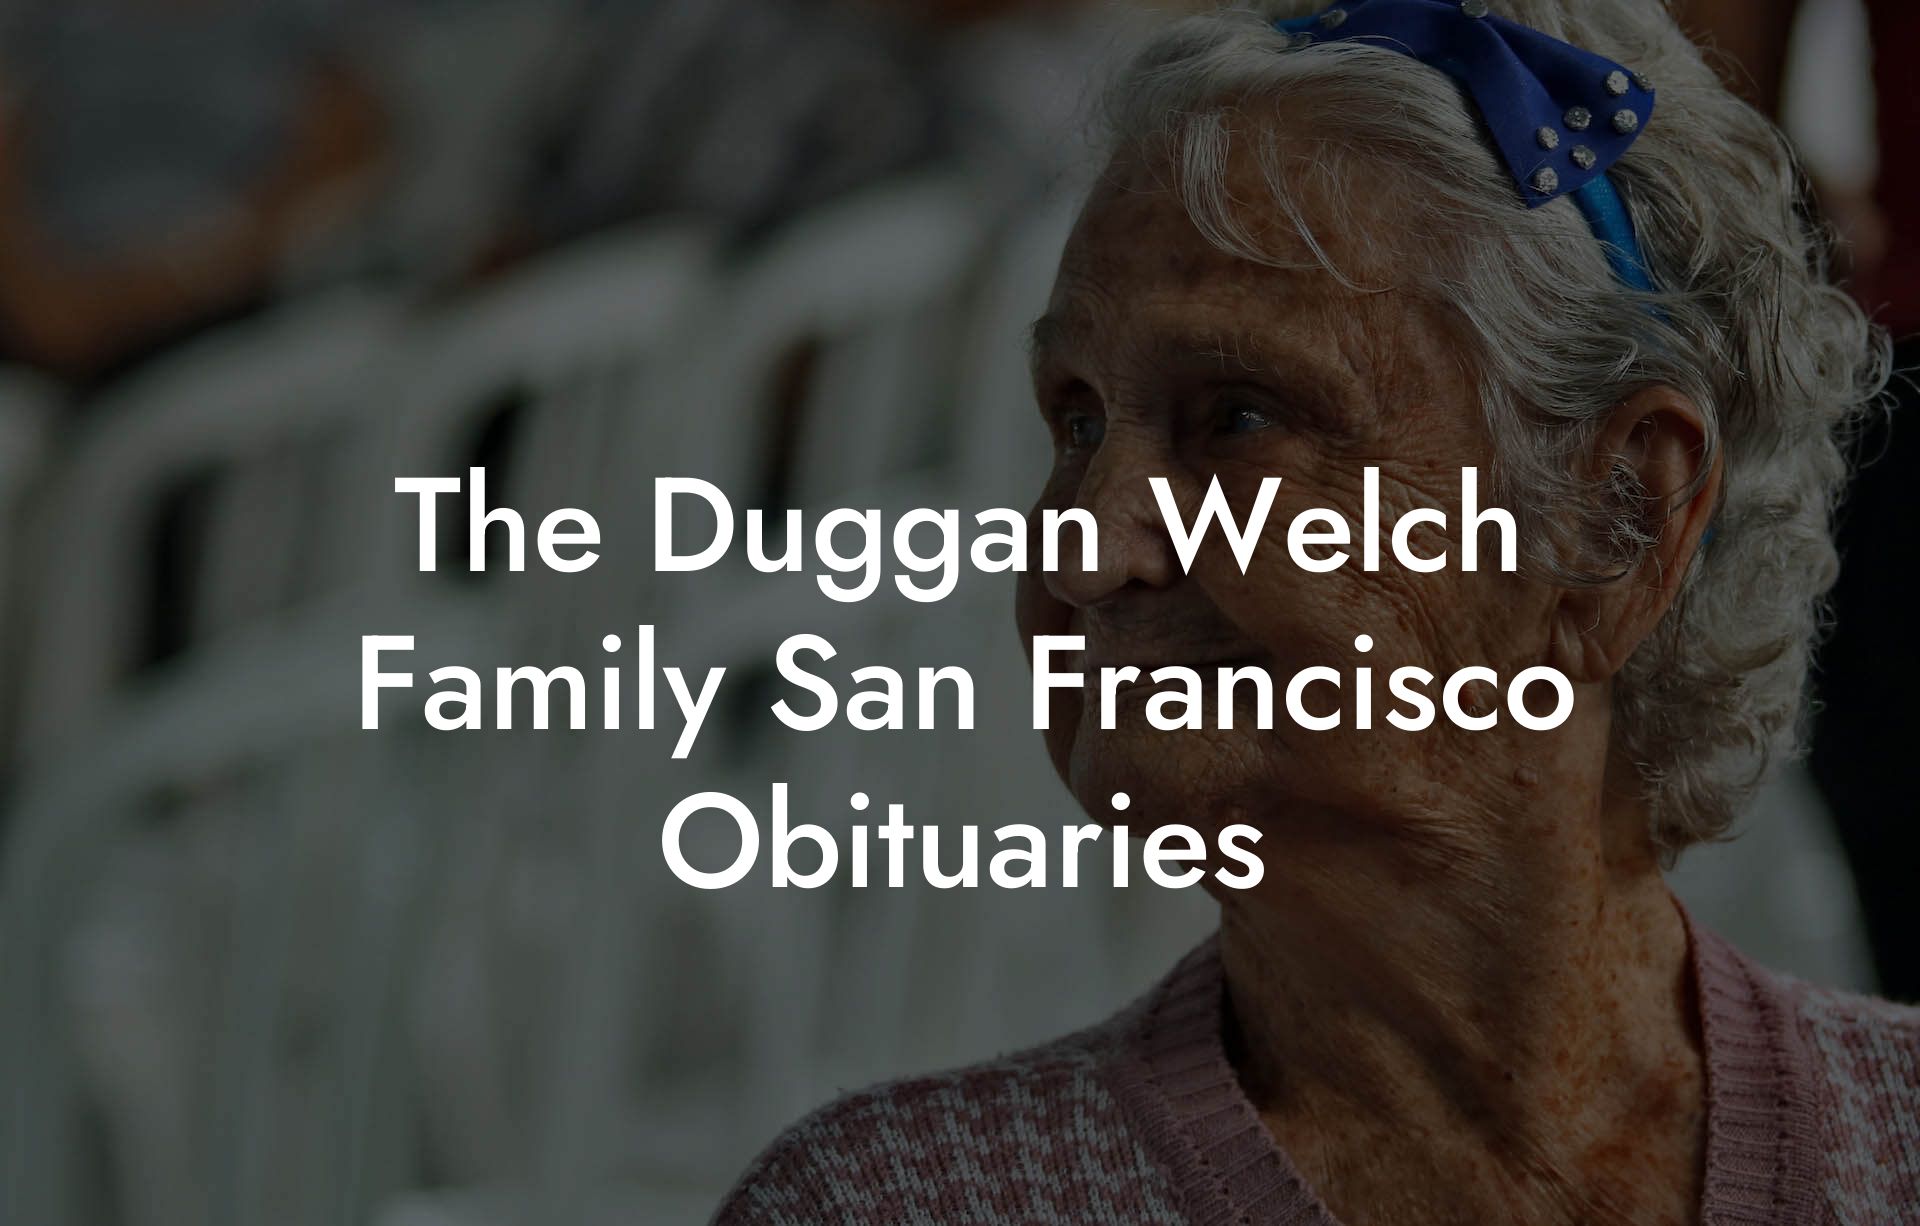 The Duggan Welch Family San Francisco Obituaries